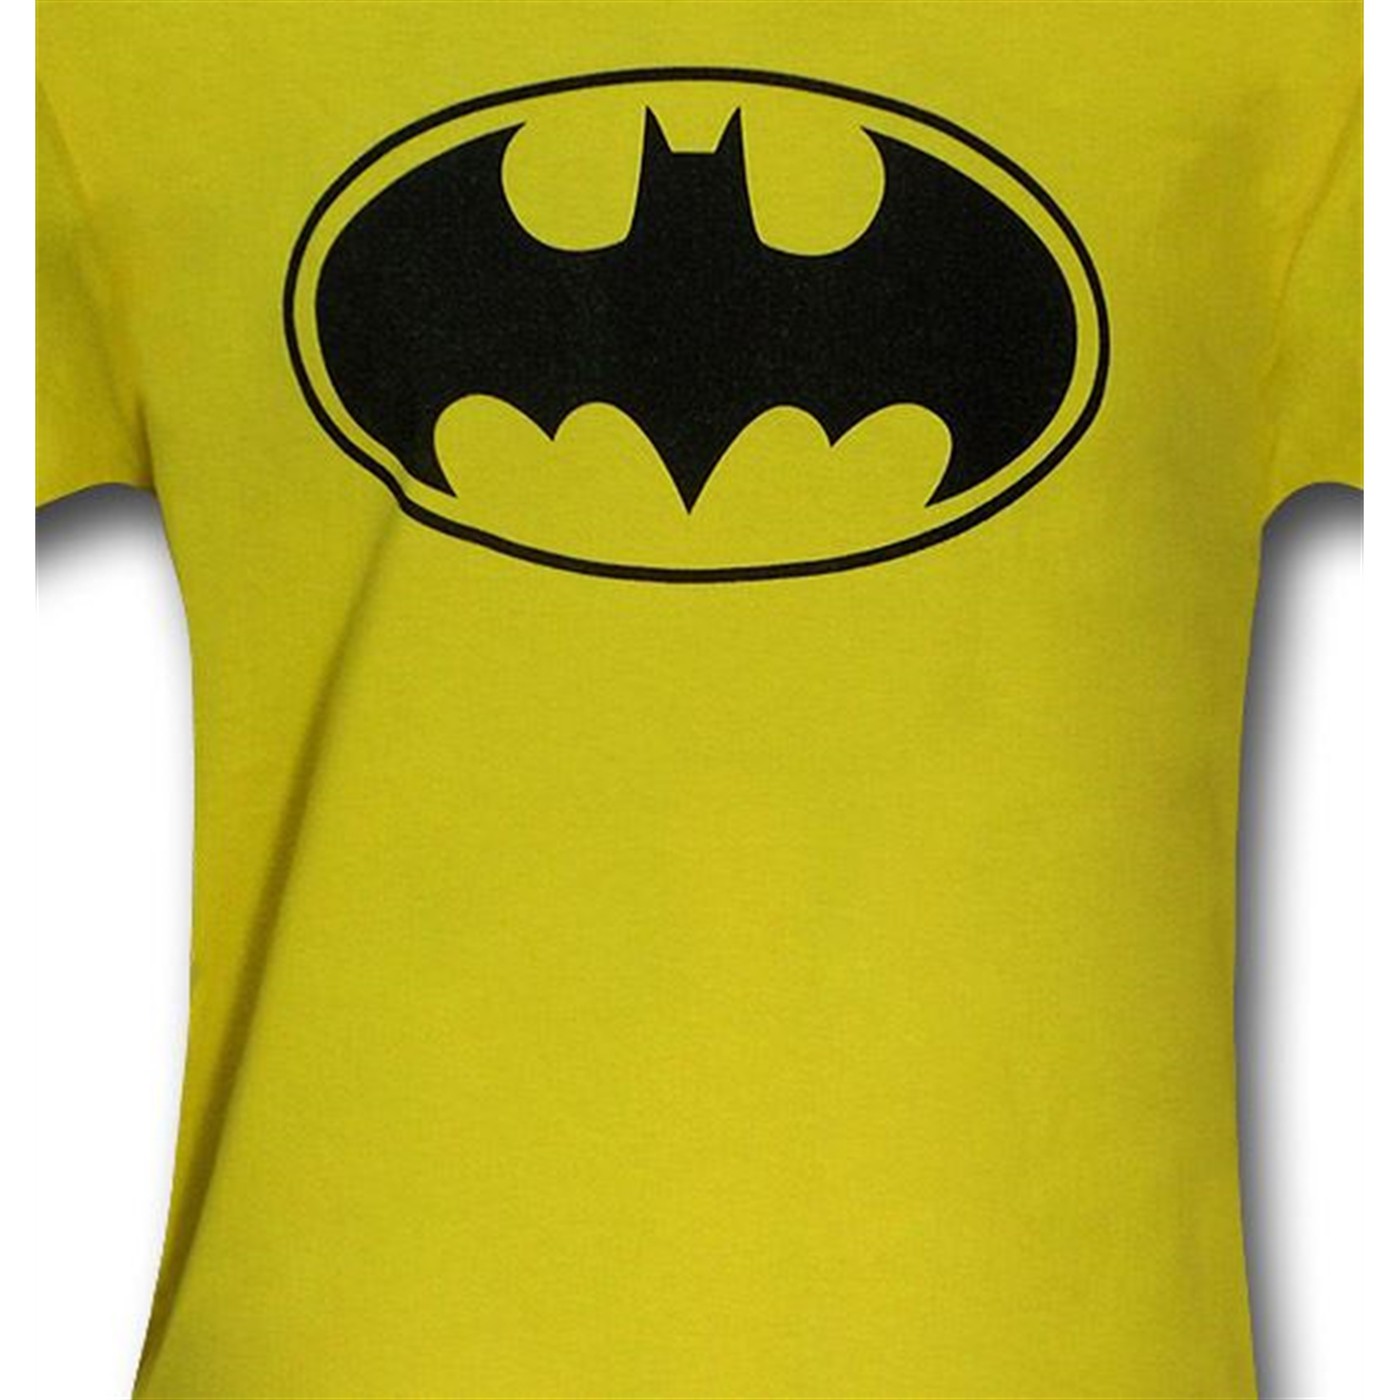 Batman Symbol Yellow T-Shirt